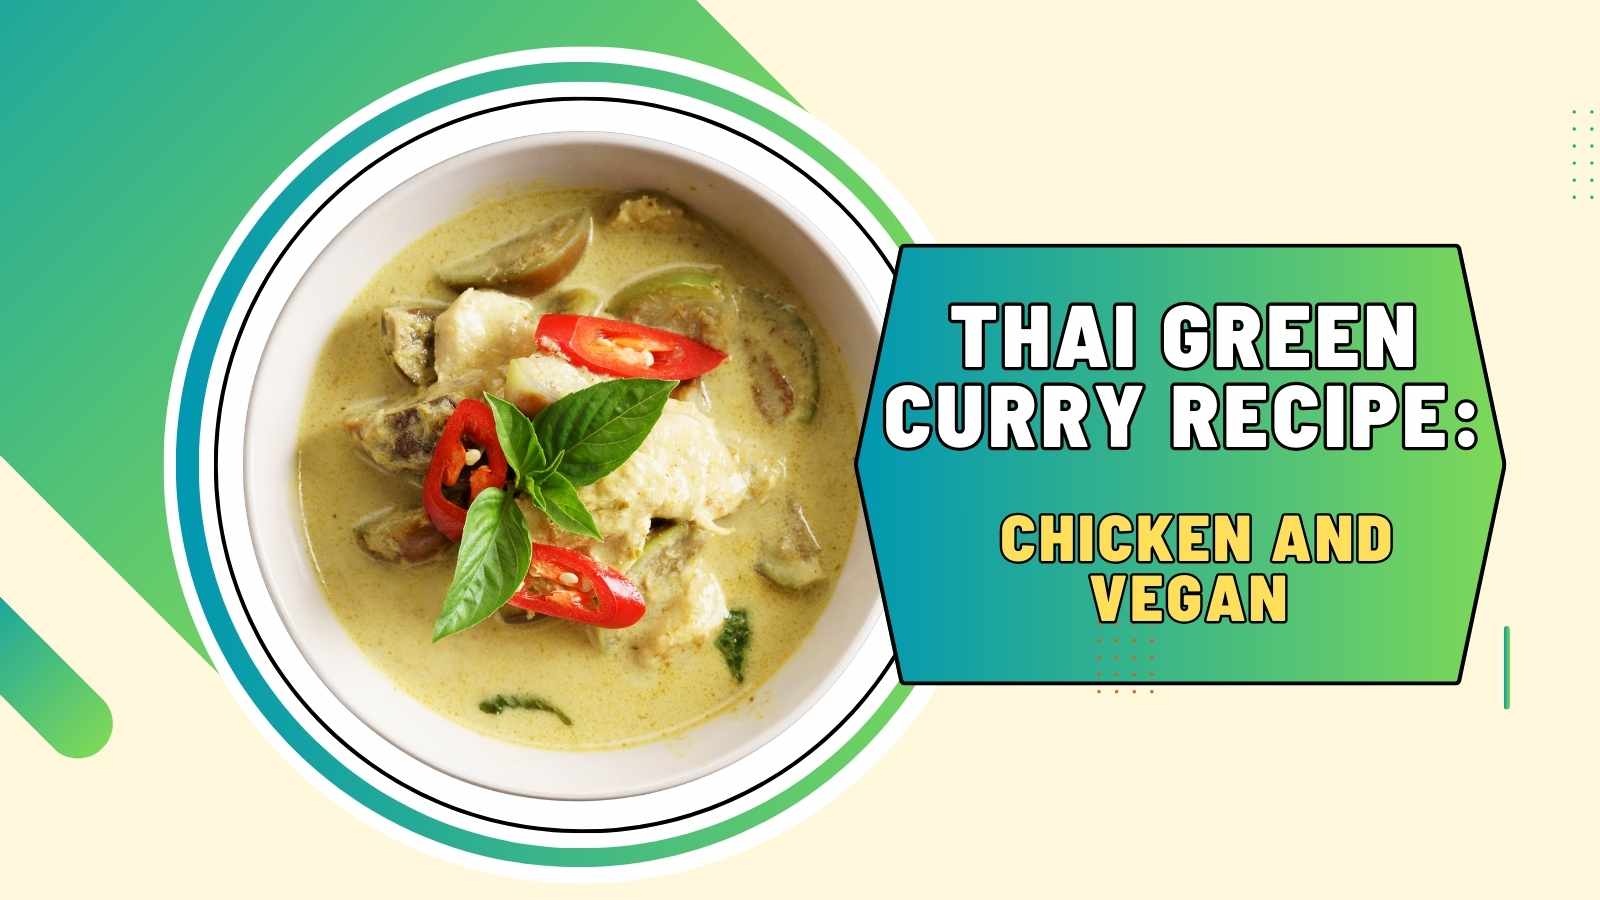 Thai Green Curry Recipe: Chicken and Vegan